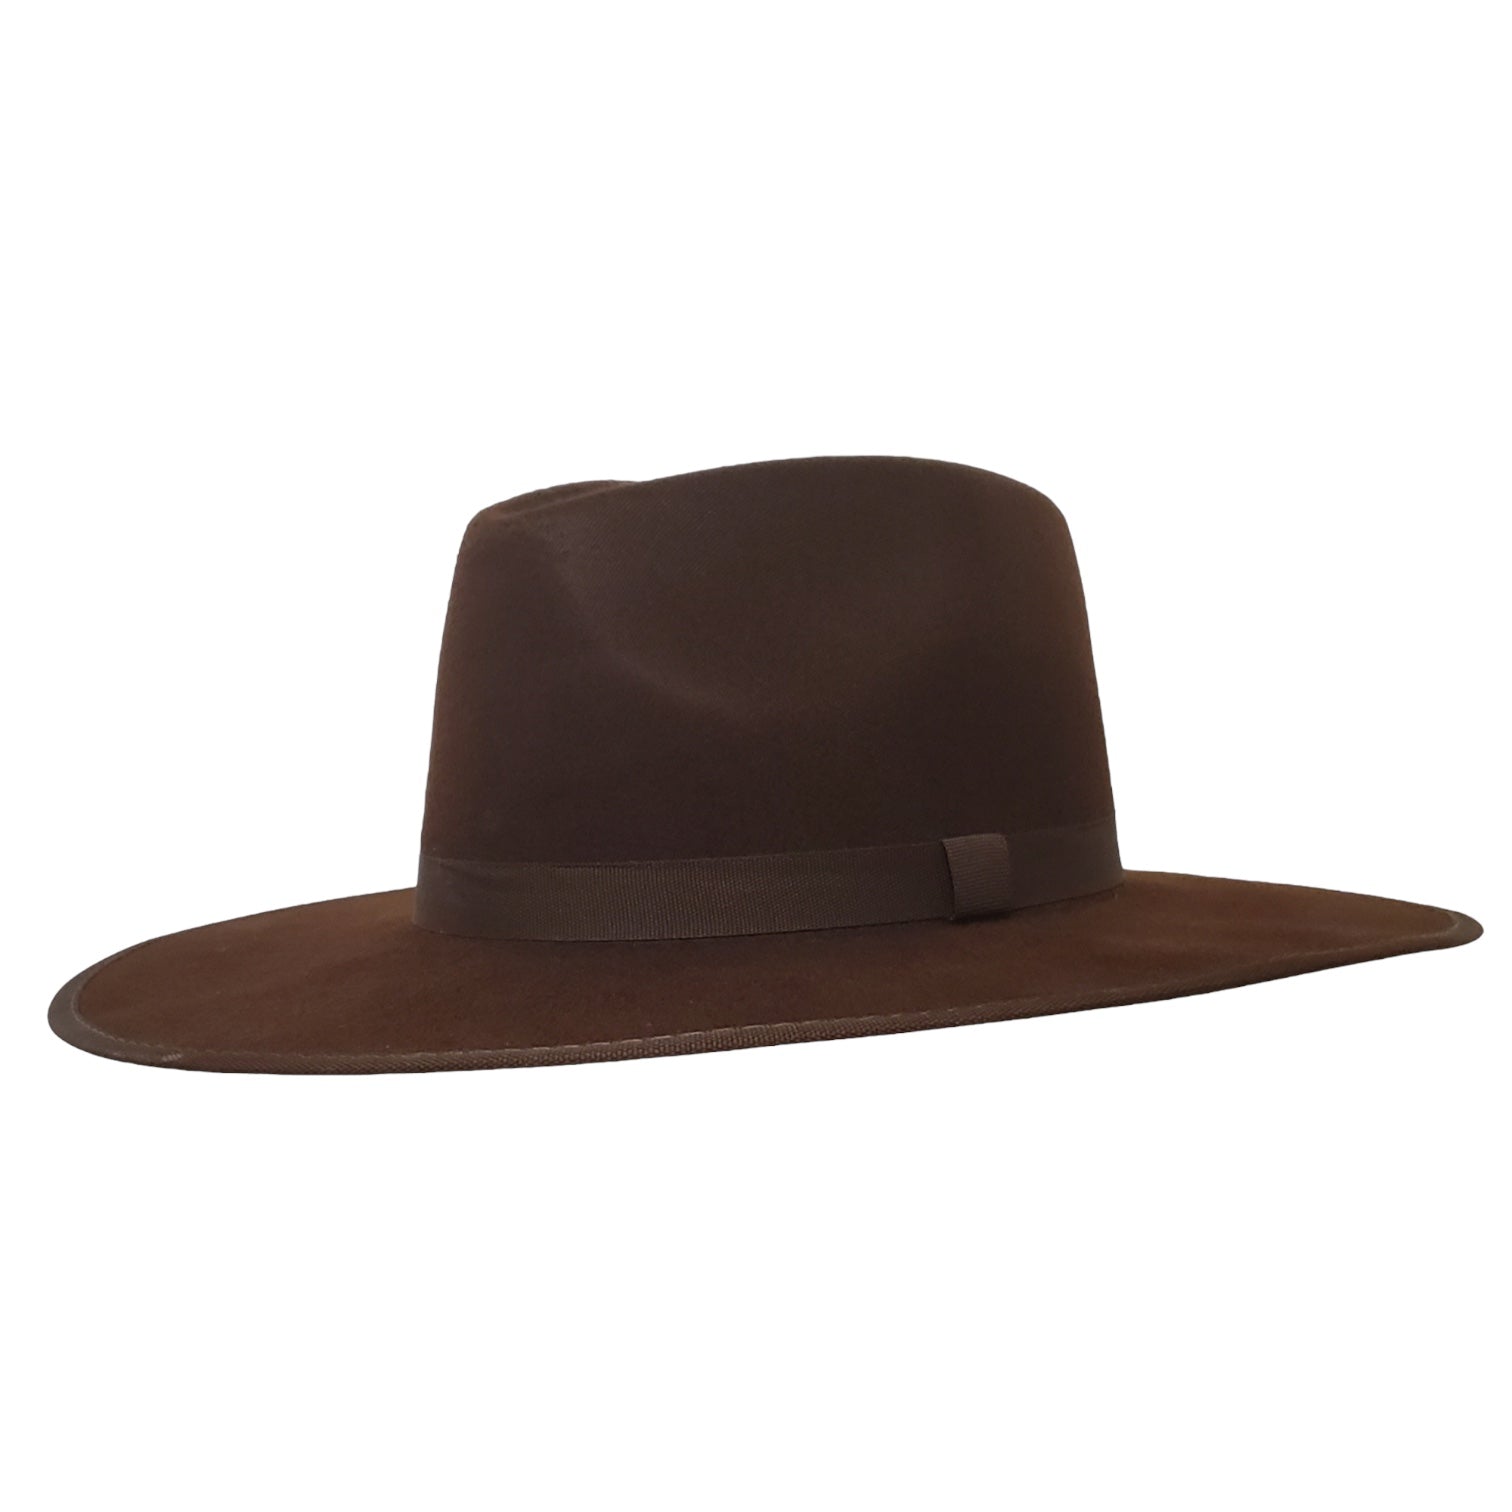 Gone Country Hats Men & Women's Hats Flat Brim Brown - Cotton (Drifter Series)